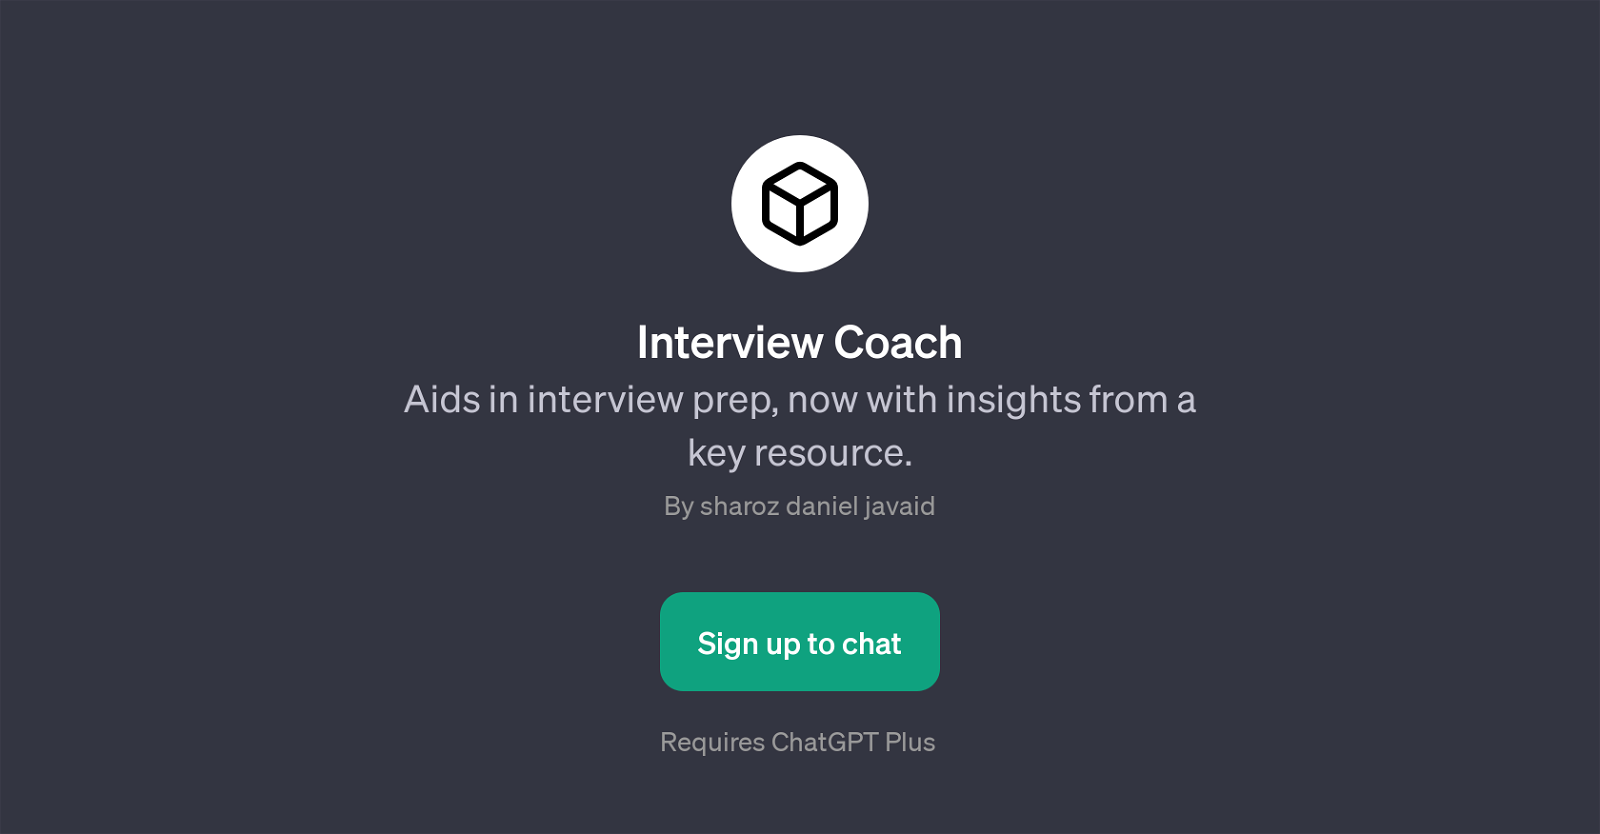 Interview Coach website